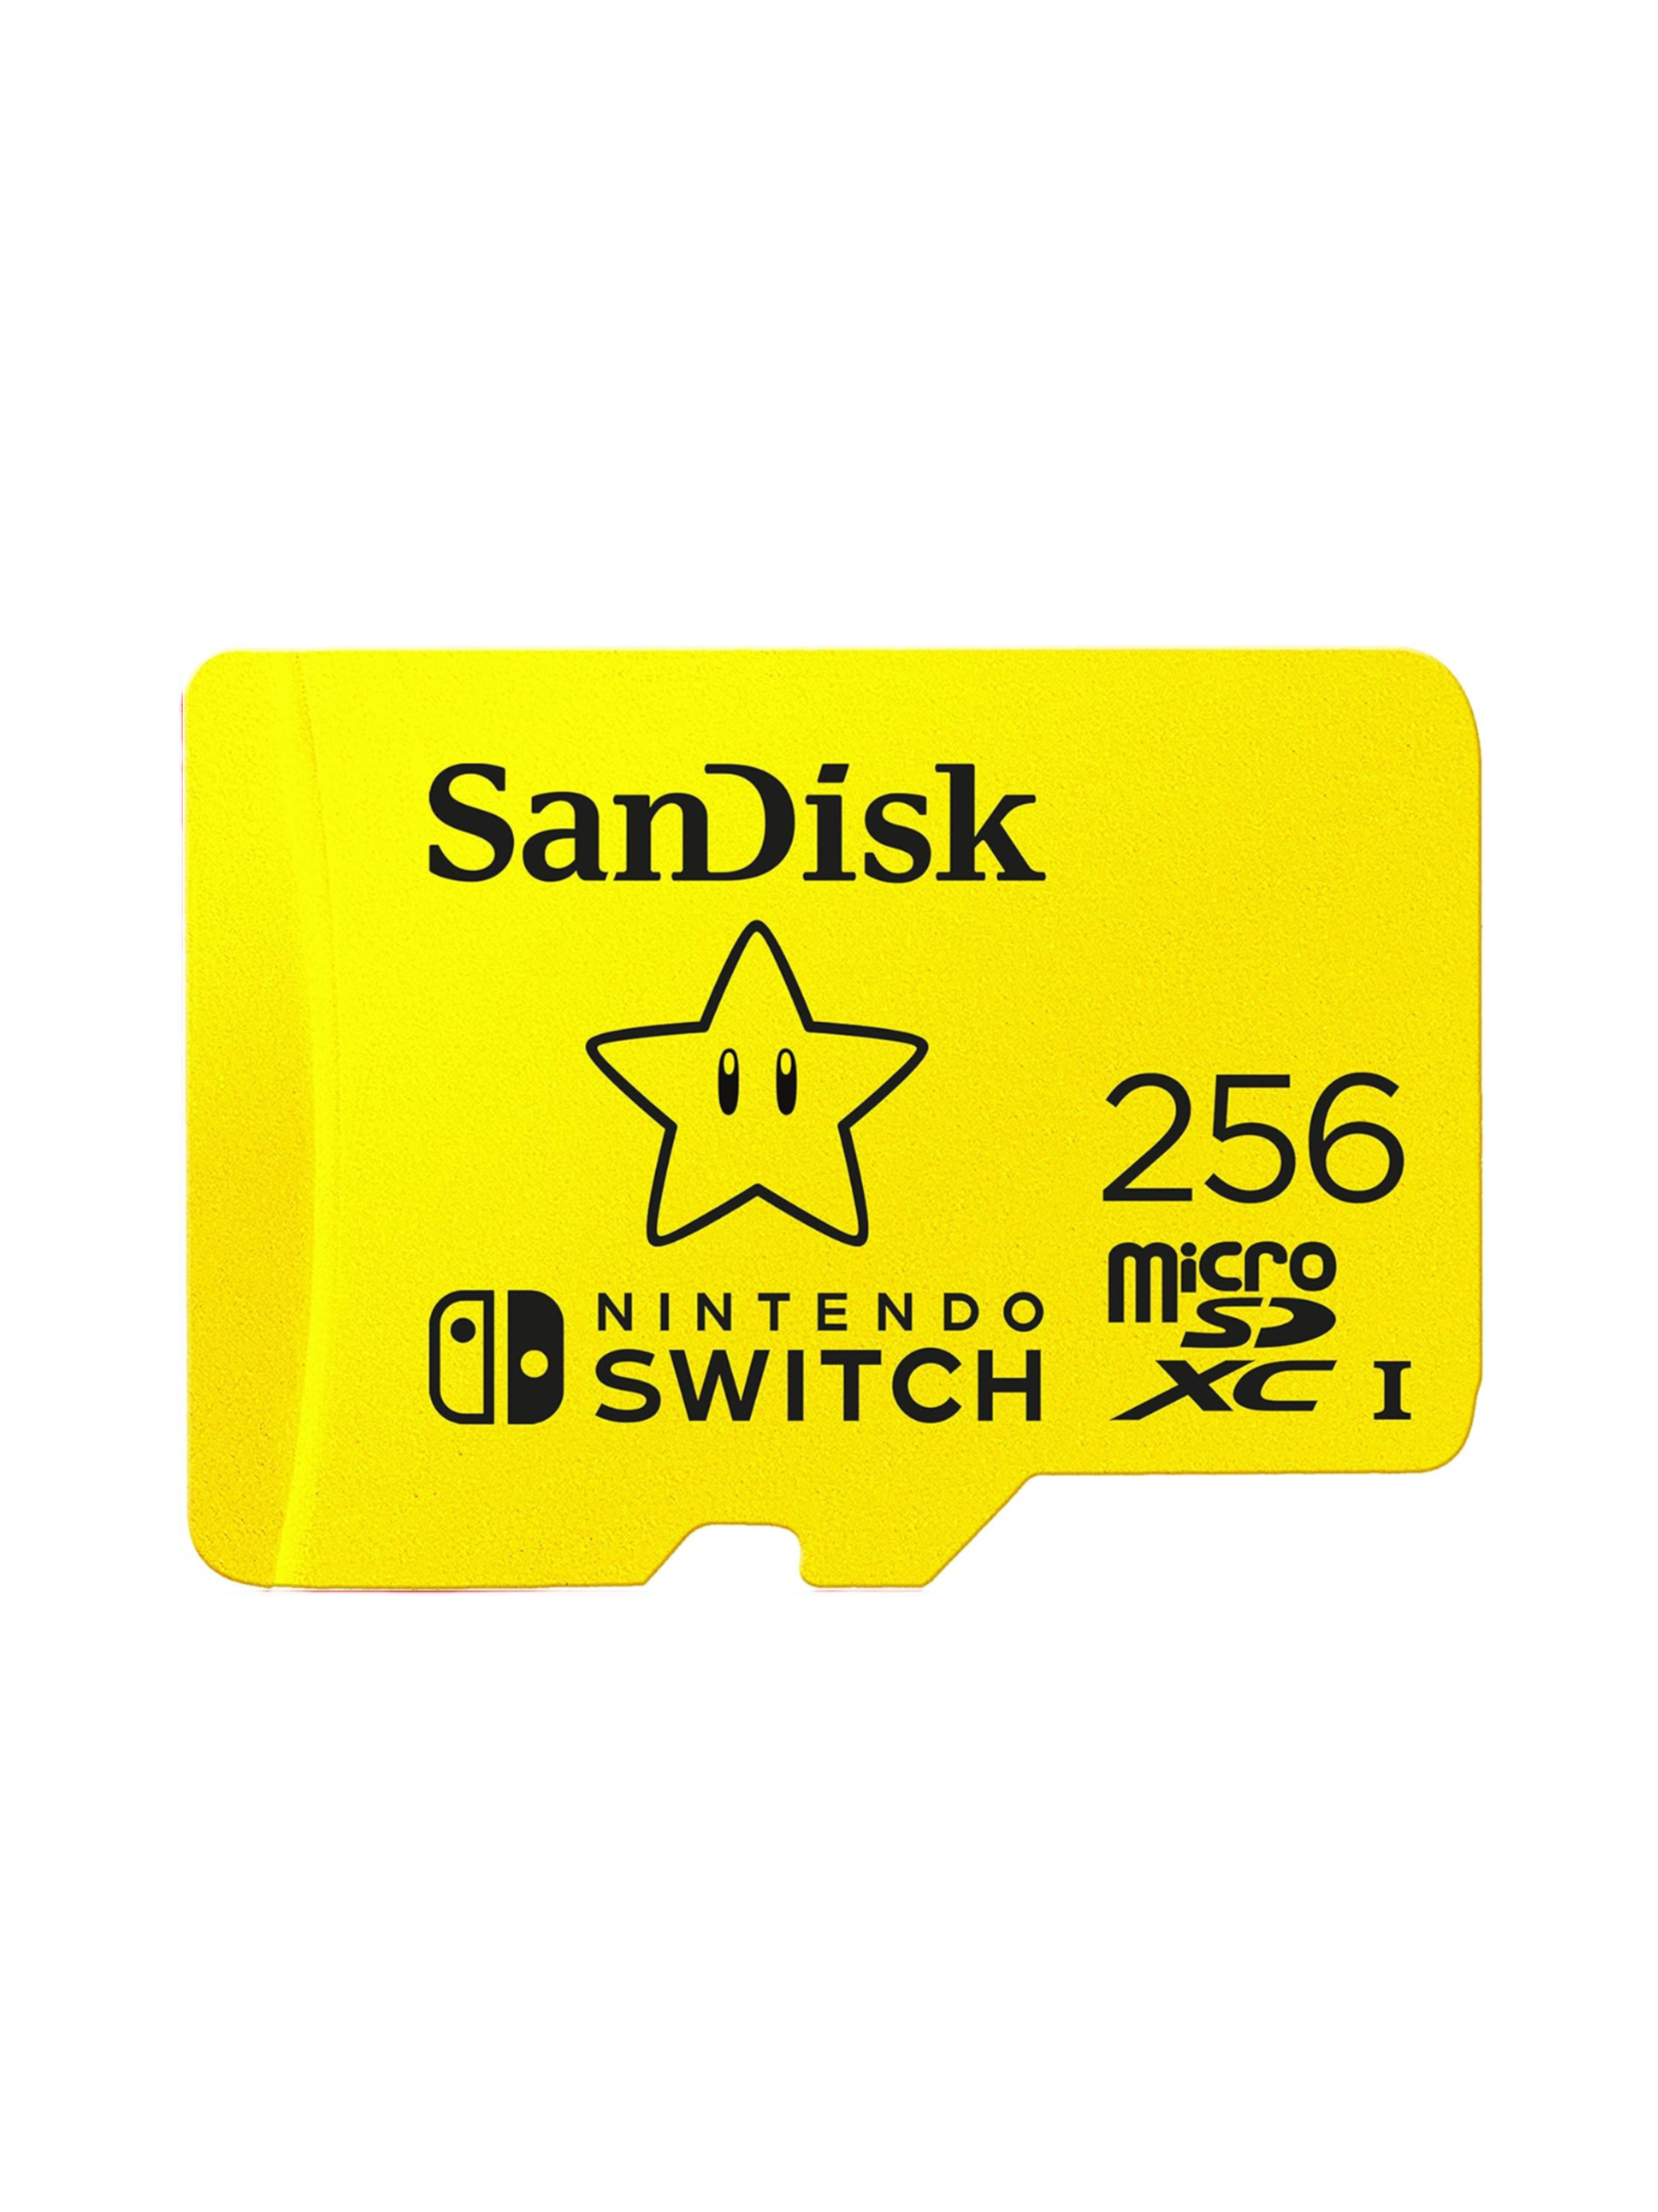 SanDisk microSDXC UHS-I Speicherkarte für Nintendo Switch  (V30, U3, C10, A1, 100 MB/s Übertragung)